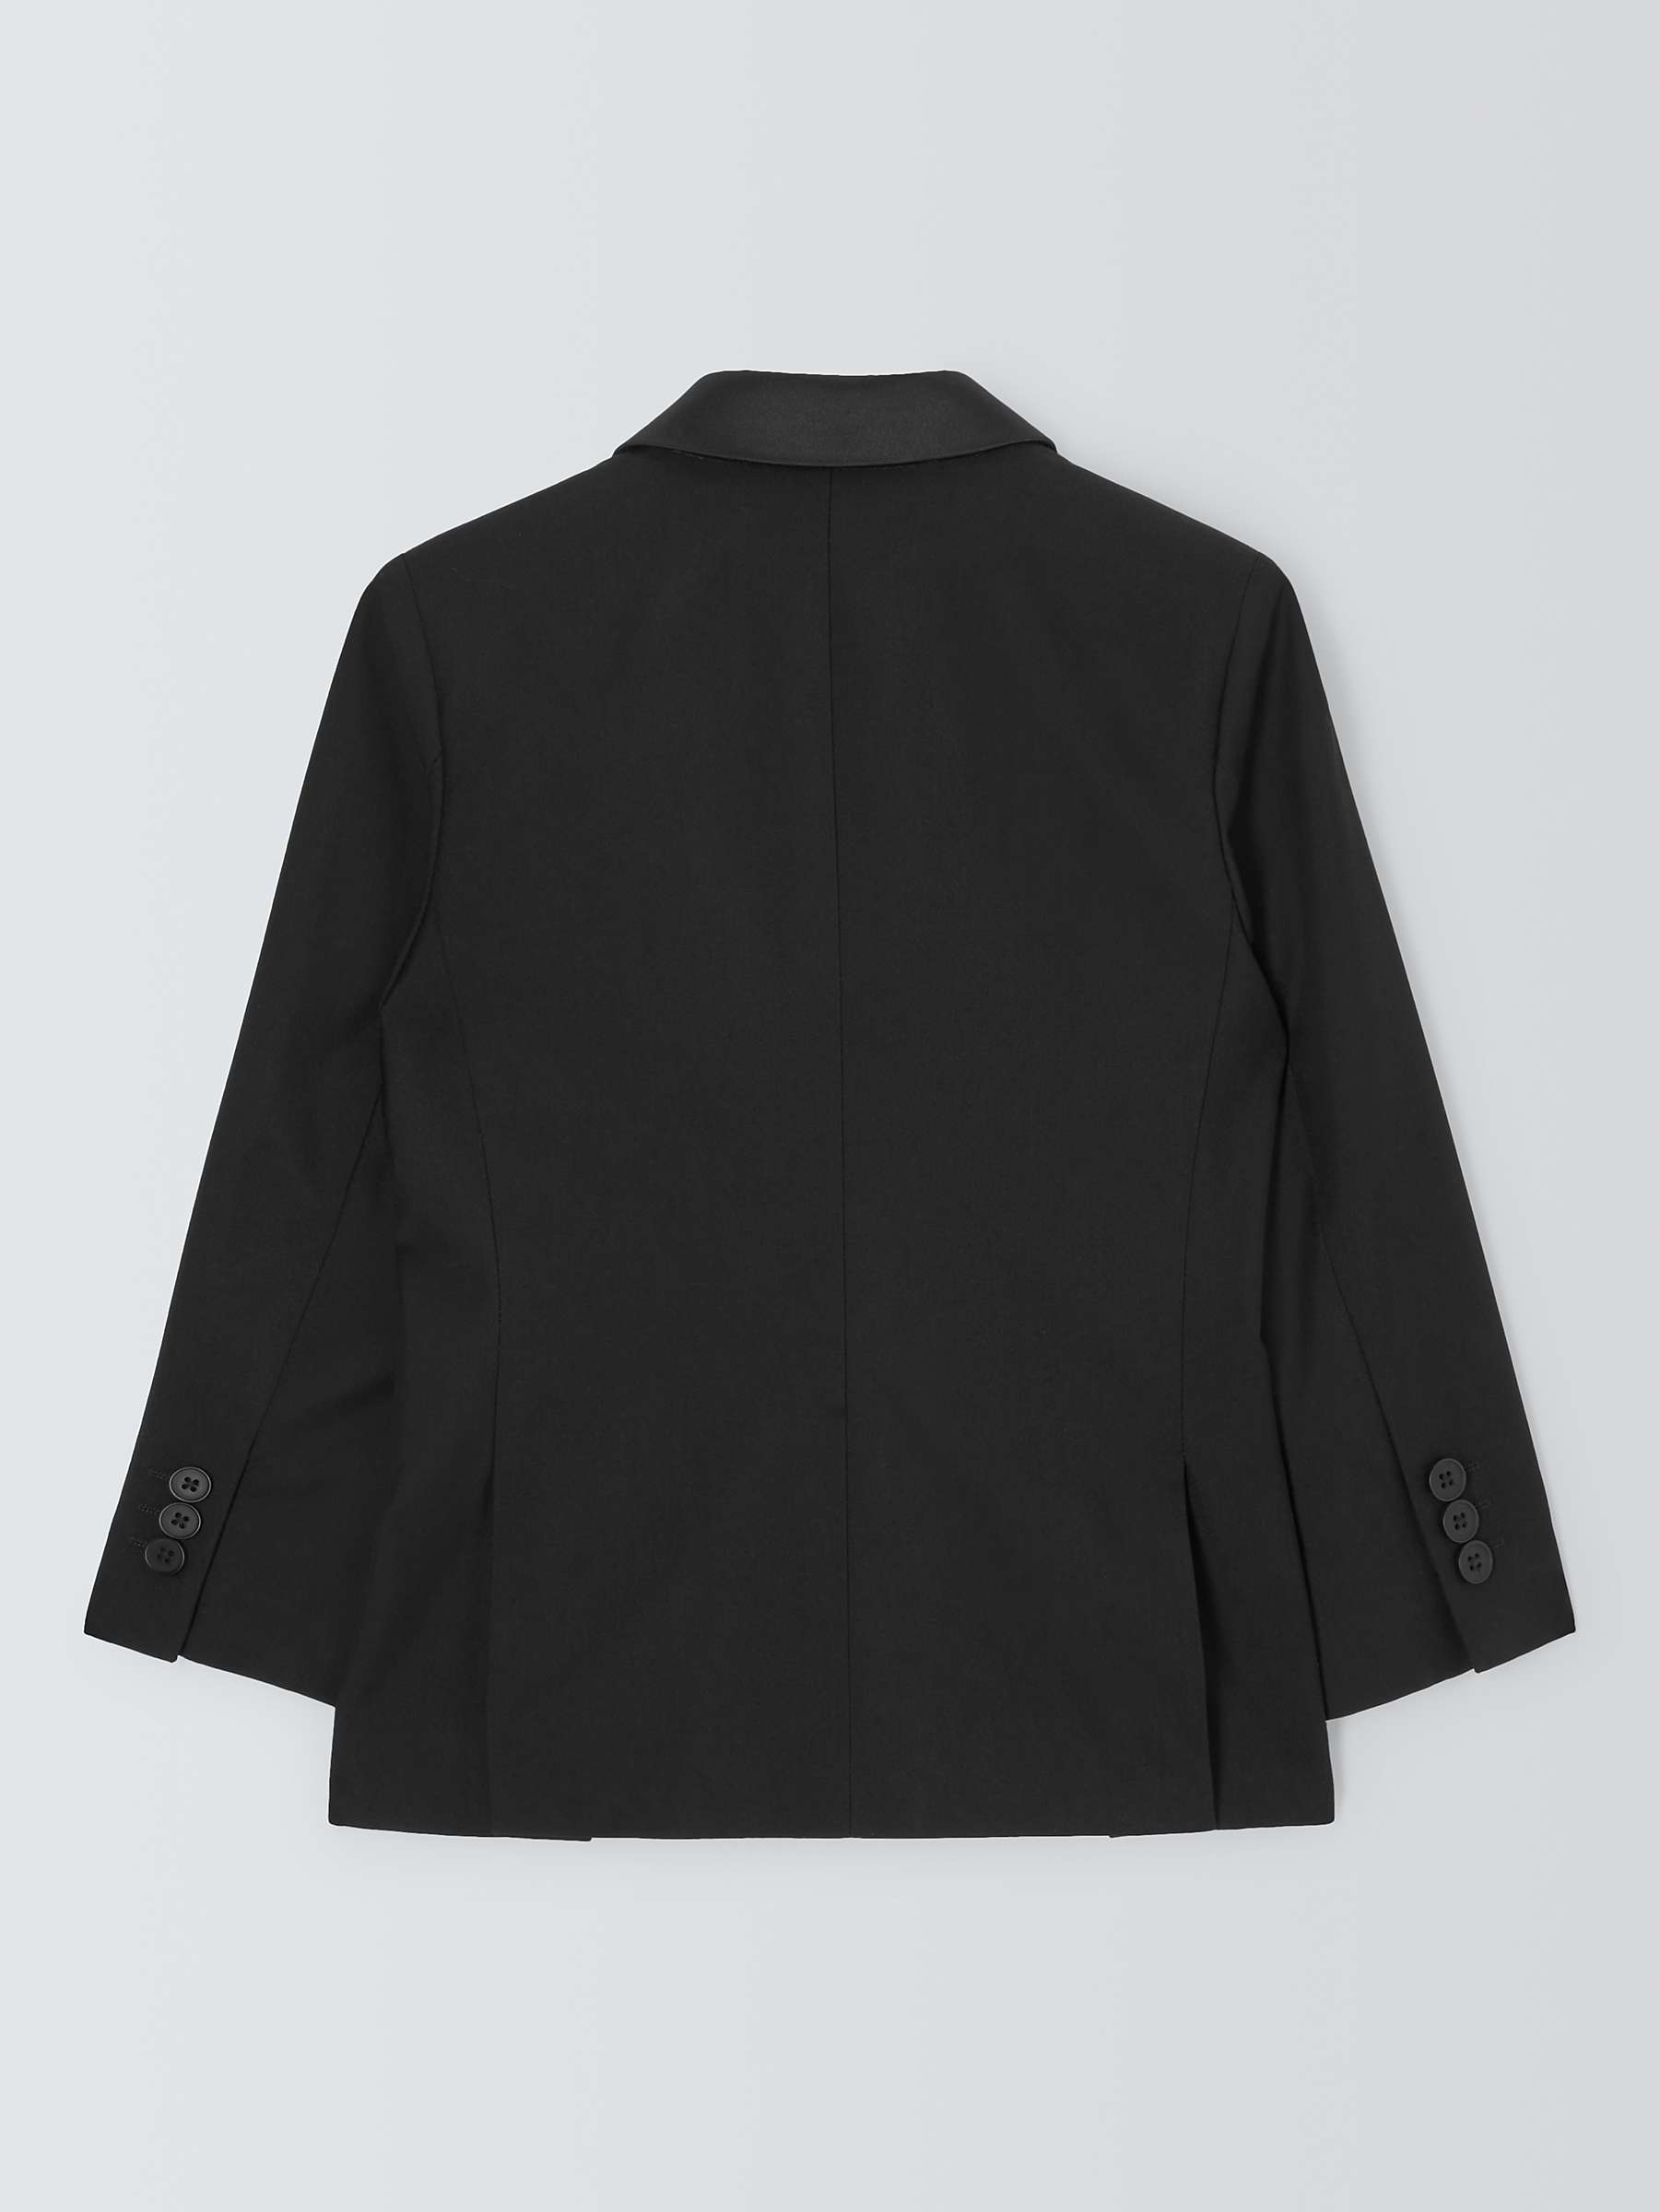 Buy John Lewis Heirloom Collection Kids' Tuxedo Suit Jacket, Black Online at johnlewis.com